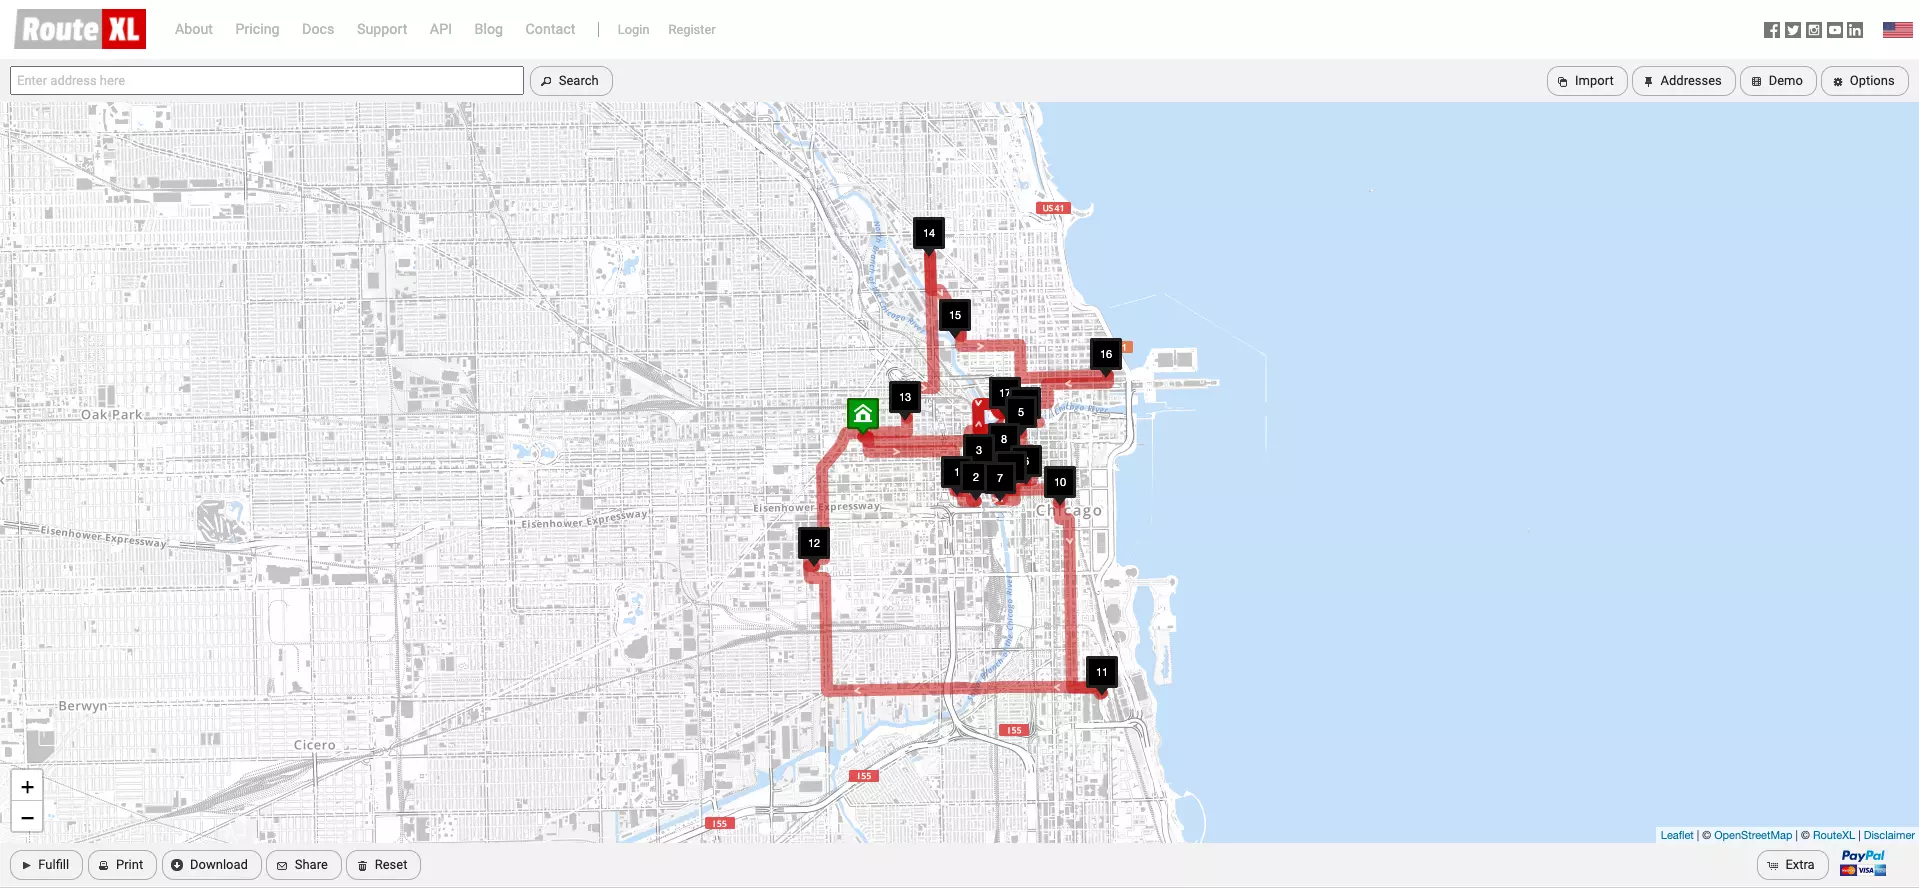 Captura de pantalla de una ruta RouteLX por Chicago